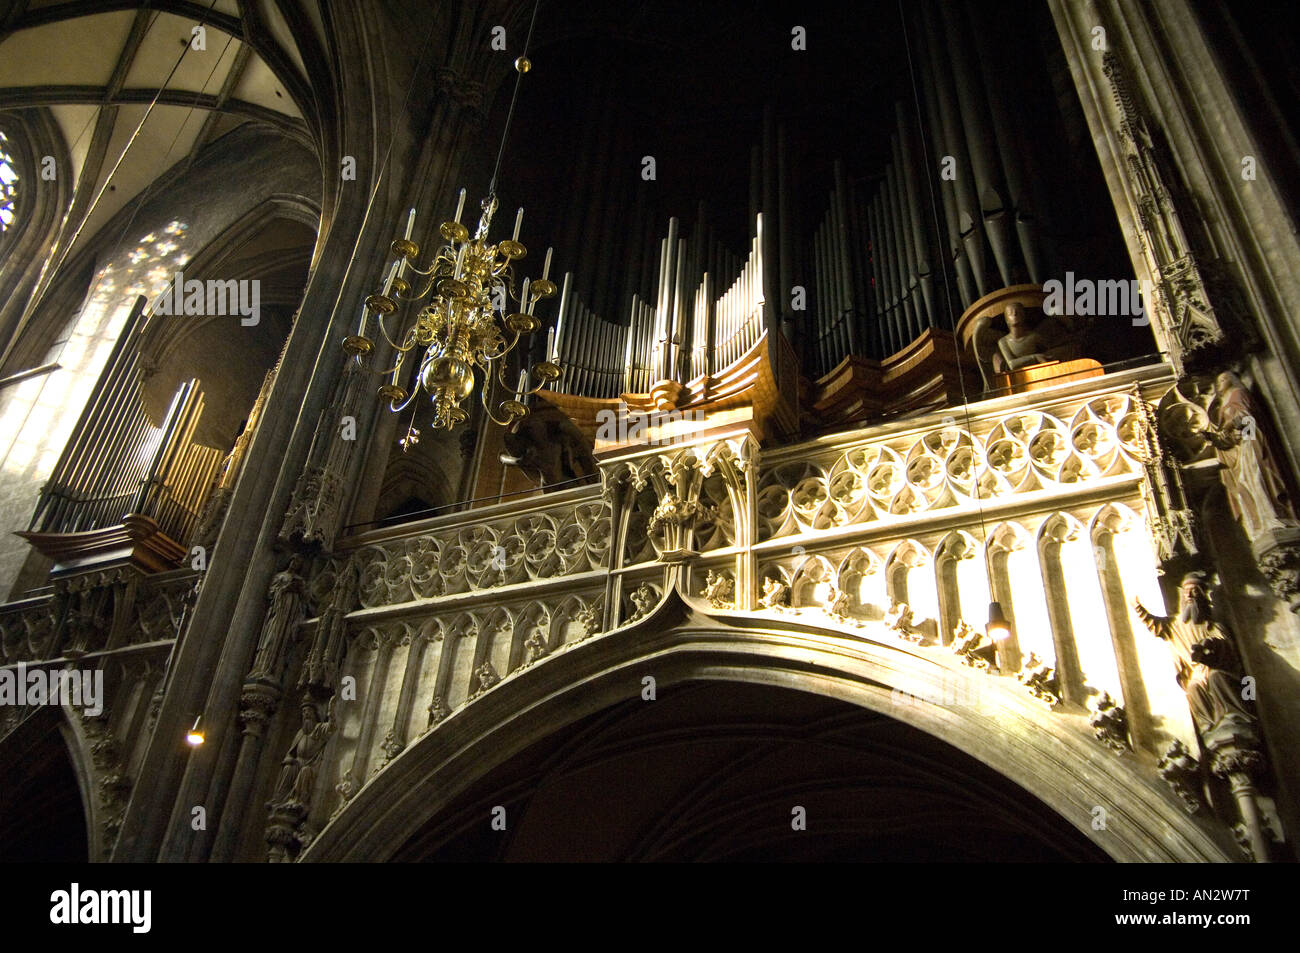 The organ loft in Vienna's Saint Stephan Cathedral - Austria Stock Photo